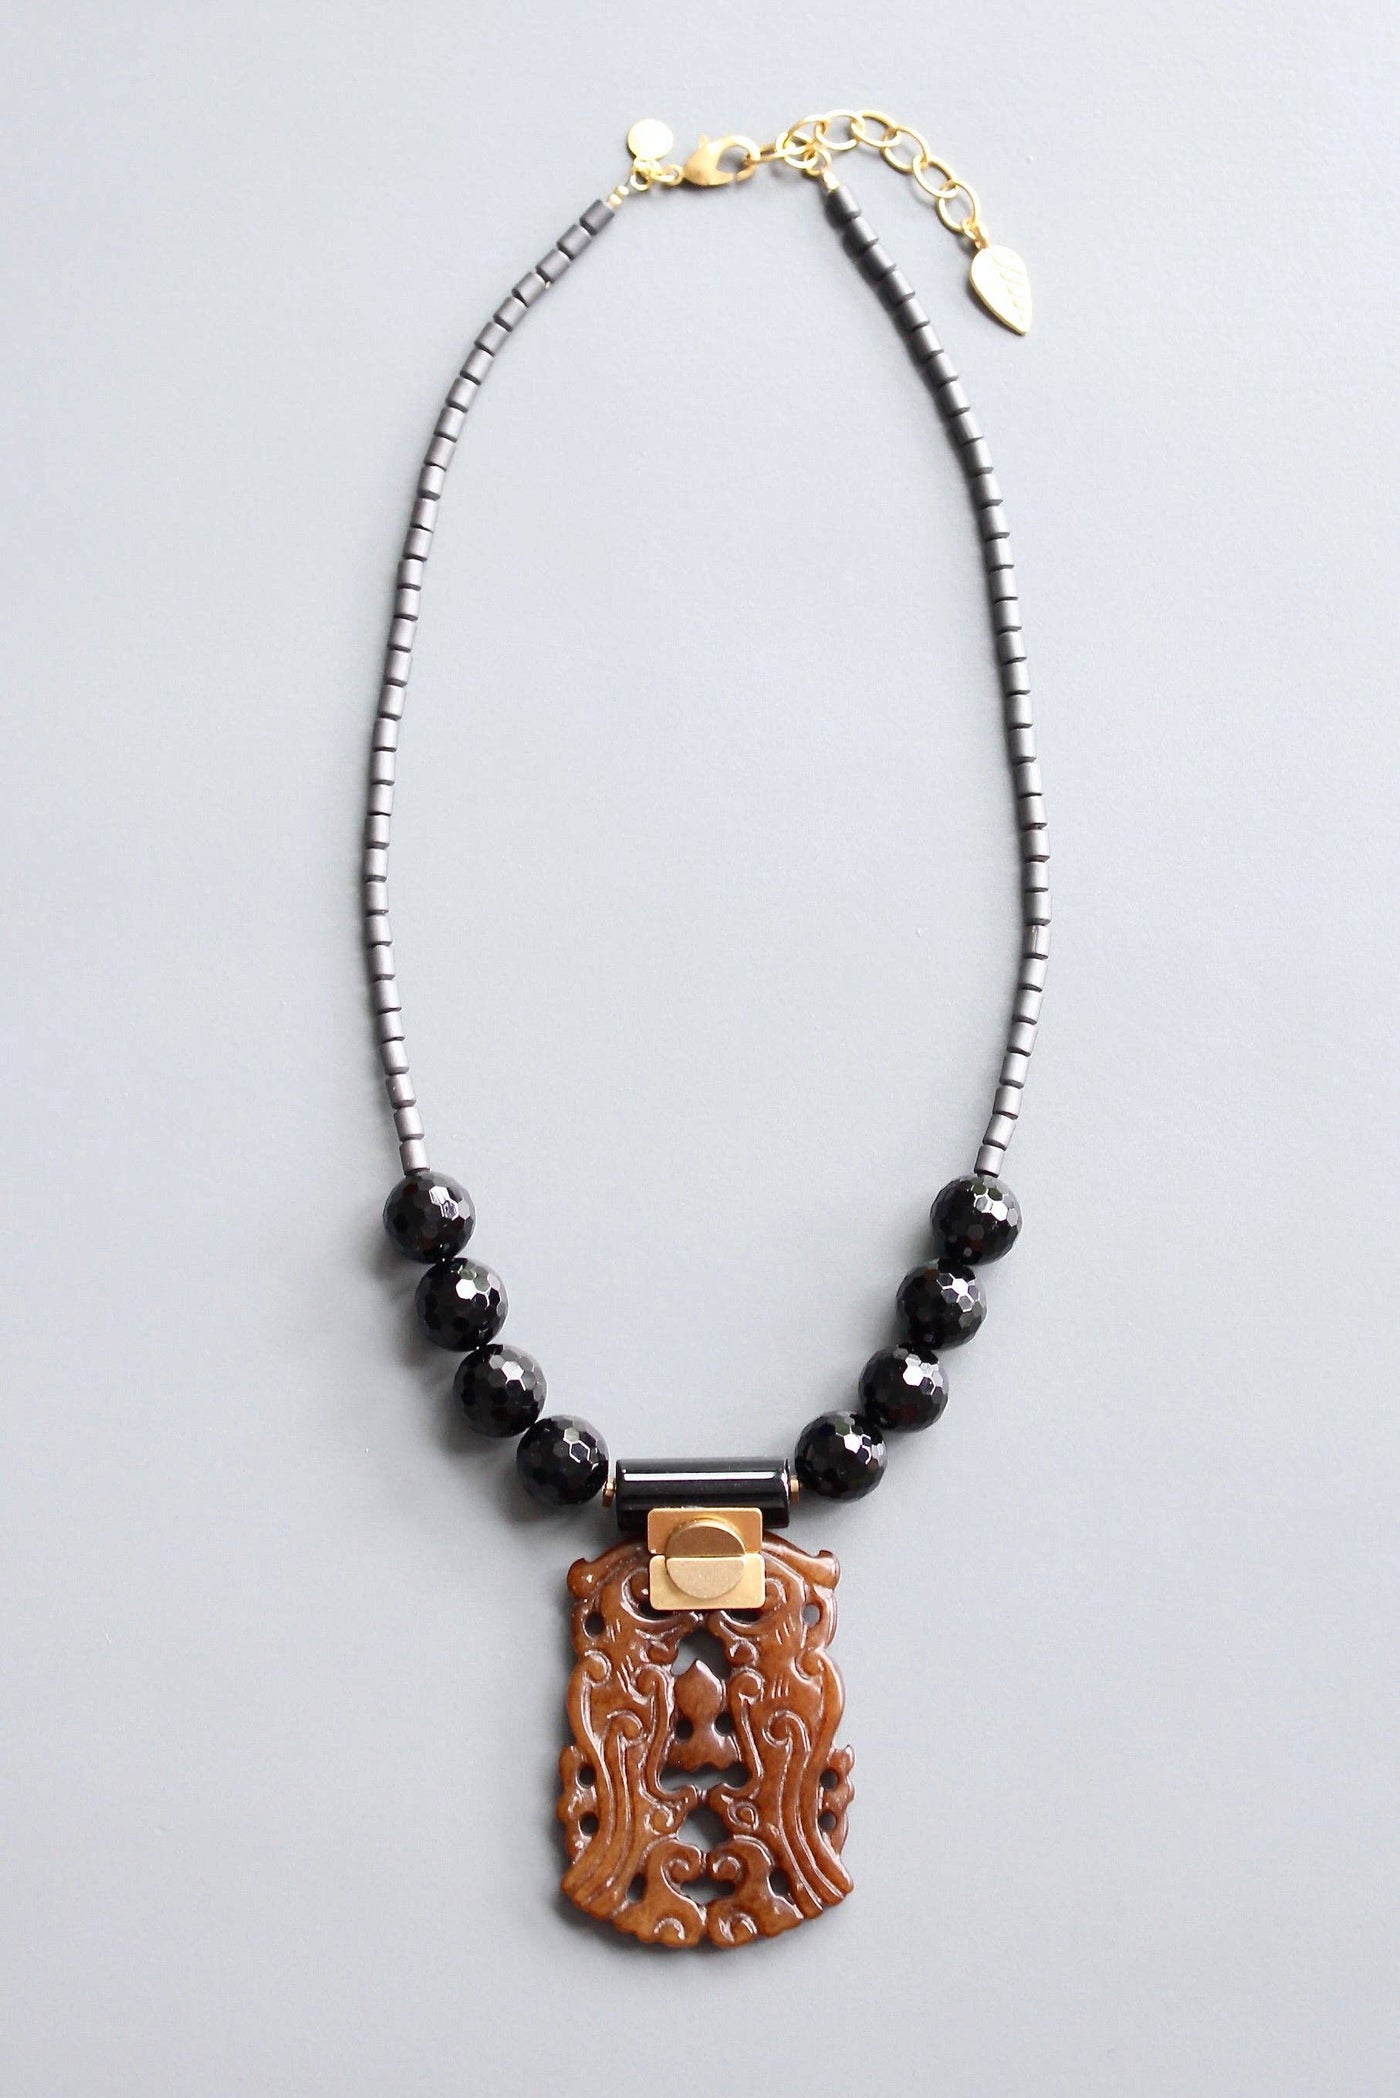 David Aubrey Jewelry HYL319 Jade and black agate pendant necklace - Simple Good